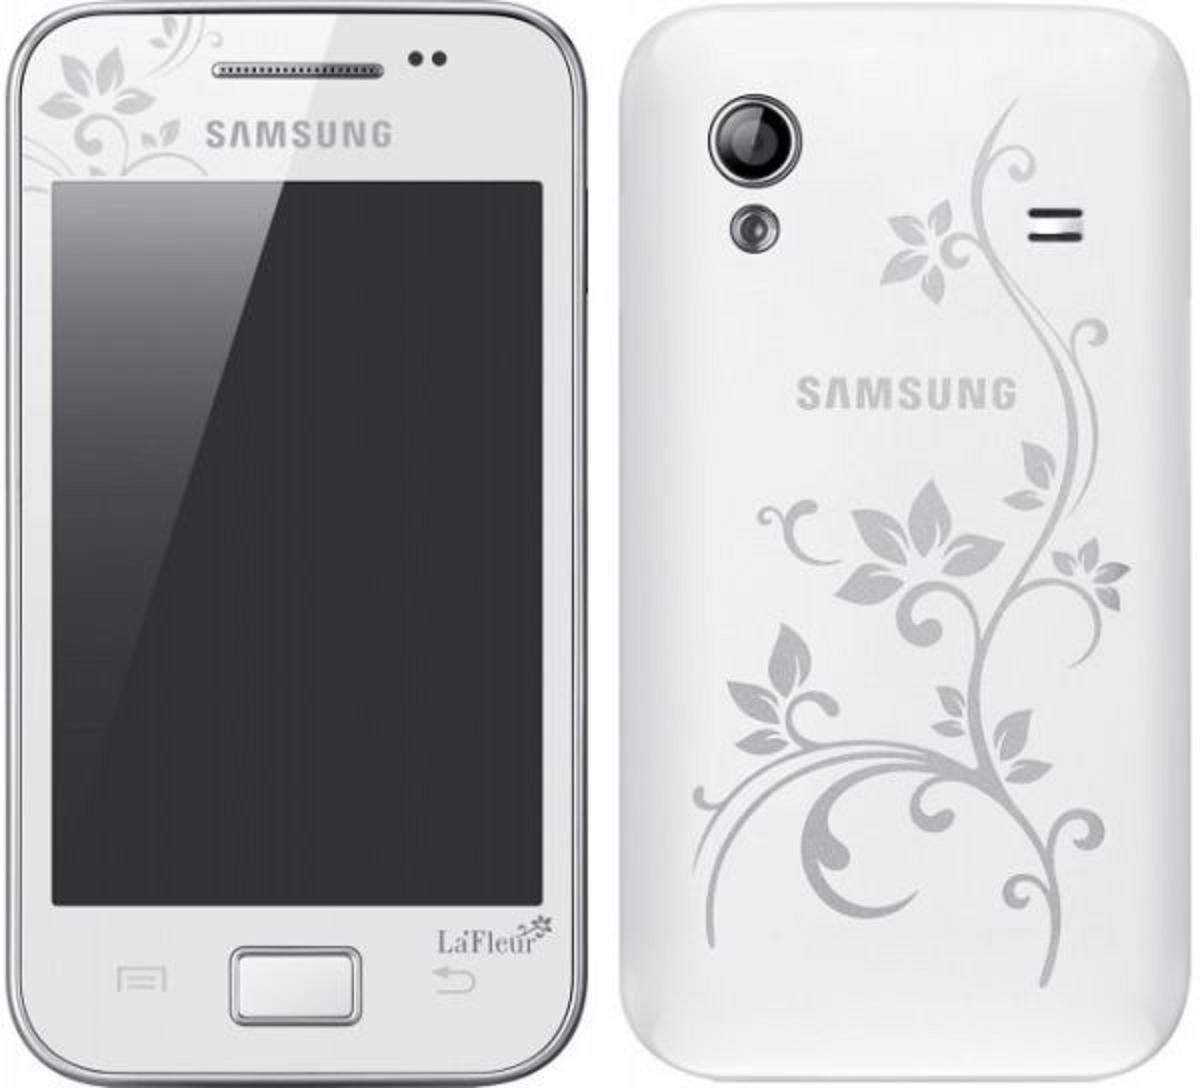 Телефон флер. Galaxy Ace la fleur gt-s5830i. Samsung Galaxy la fleur s5830. Samsung la fleur gt-s5830i. La fleur Samsung gt-s5830 Galaxy Ace.